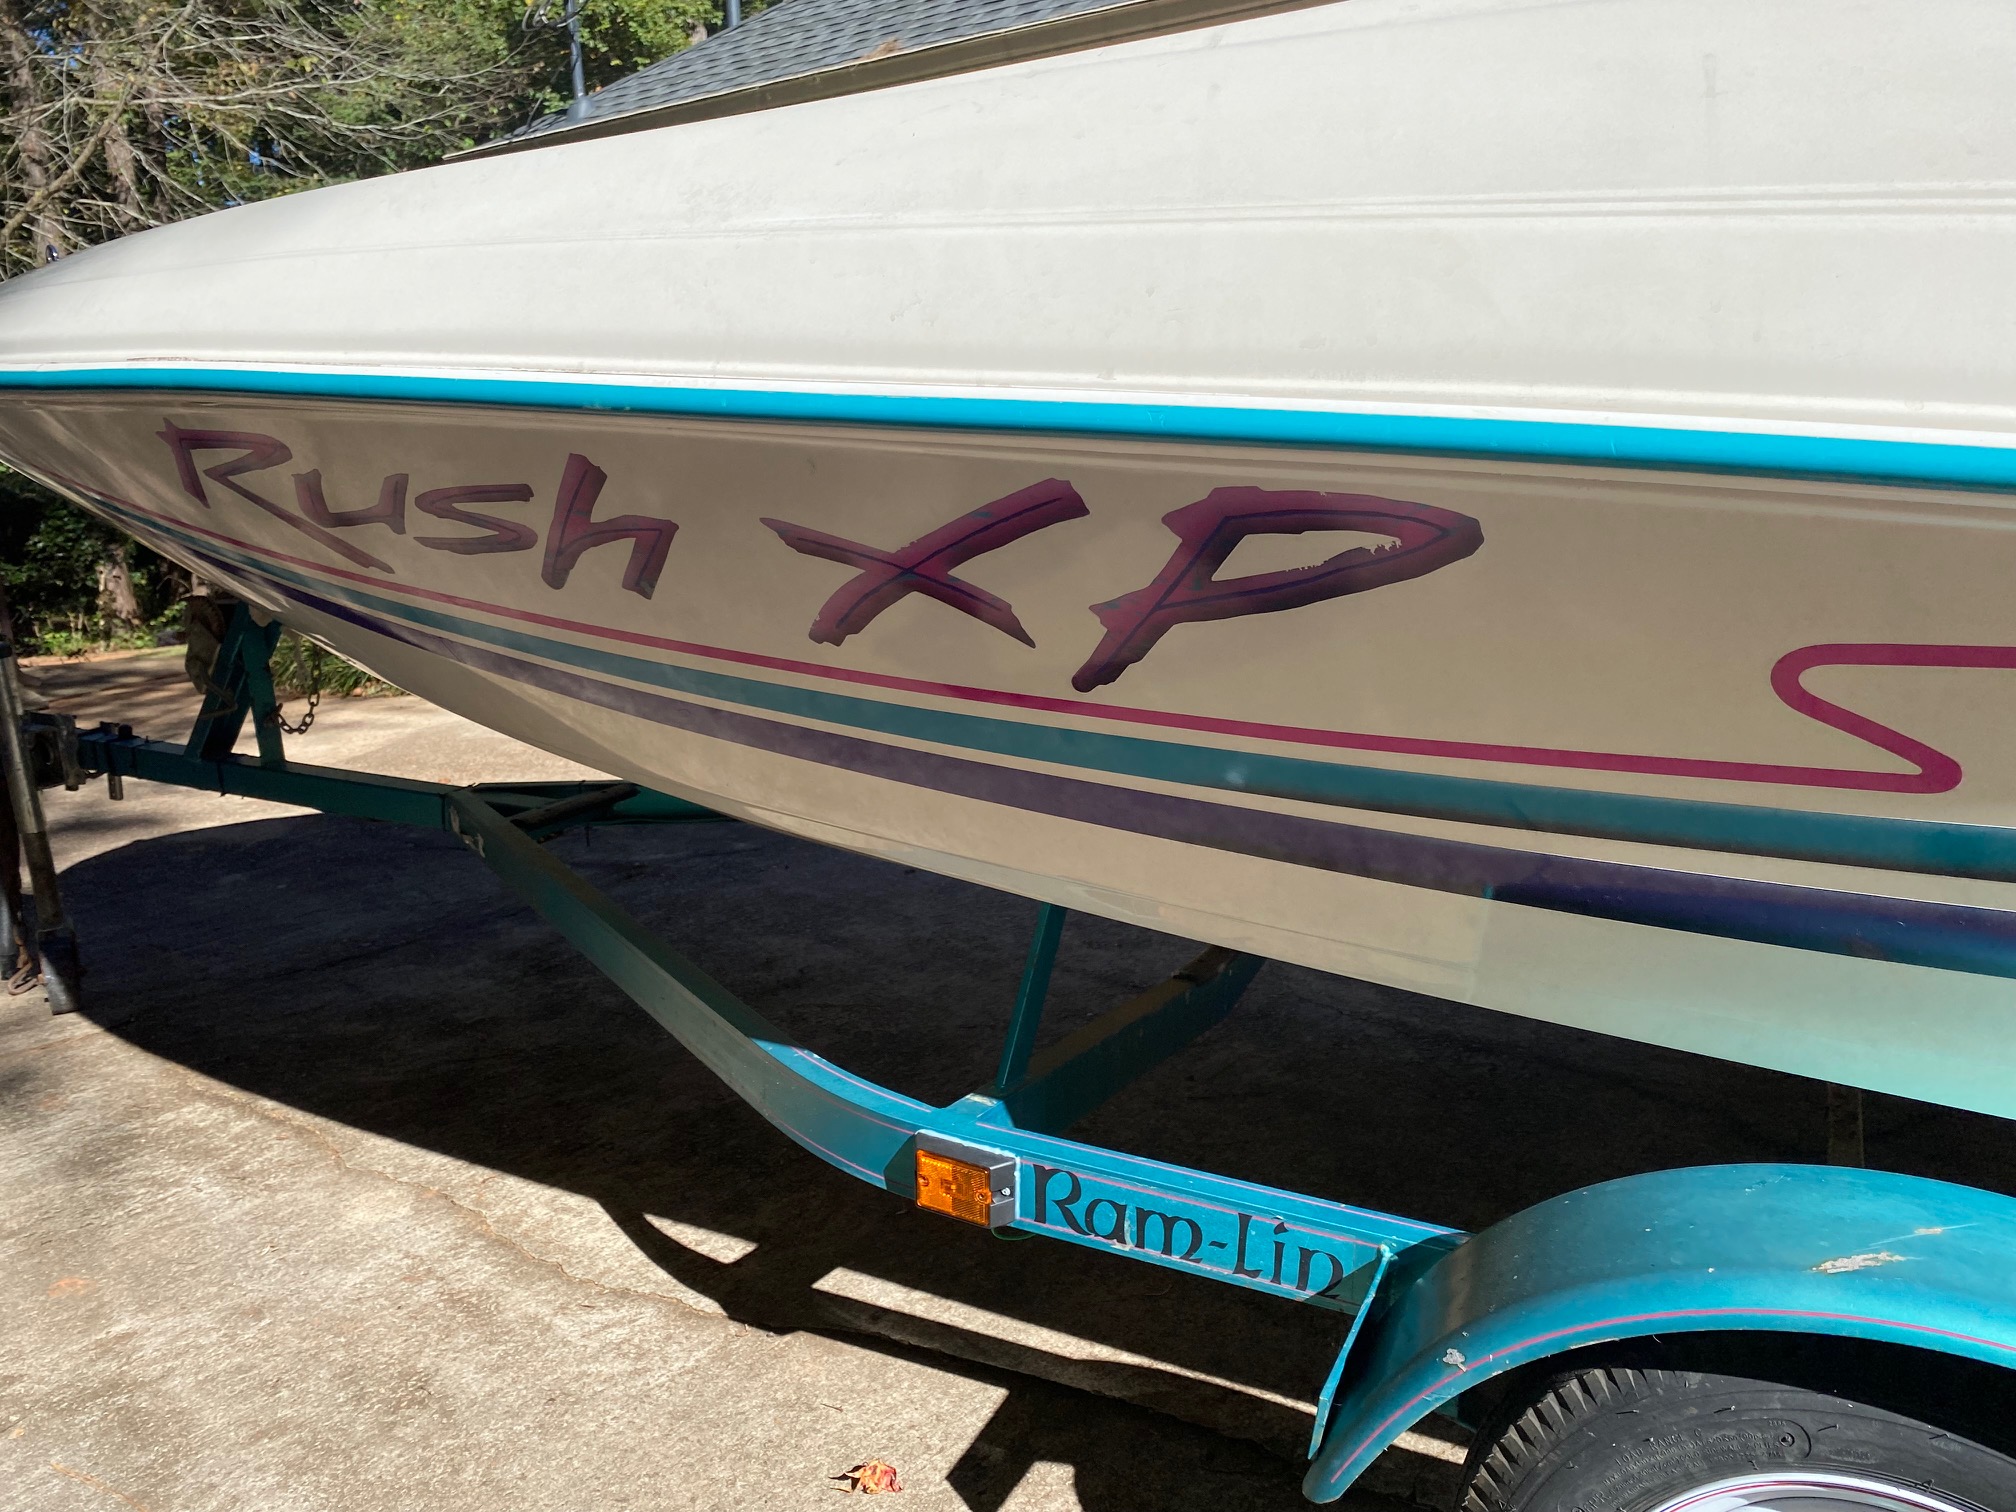 1996 16 foot Regal Rush XP Power boat for sale in Lagrange, GA - image 5 